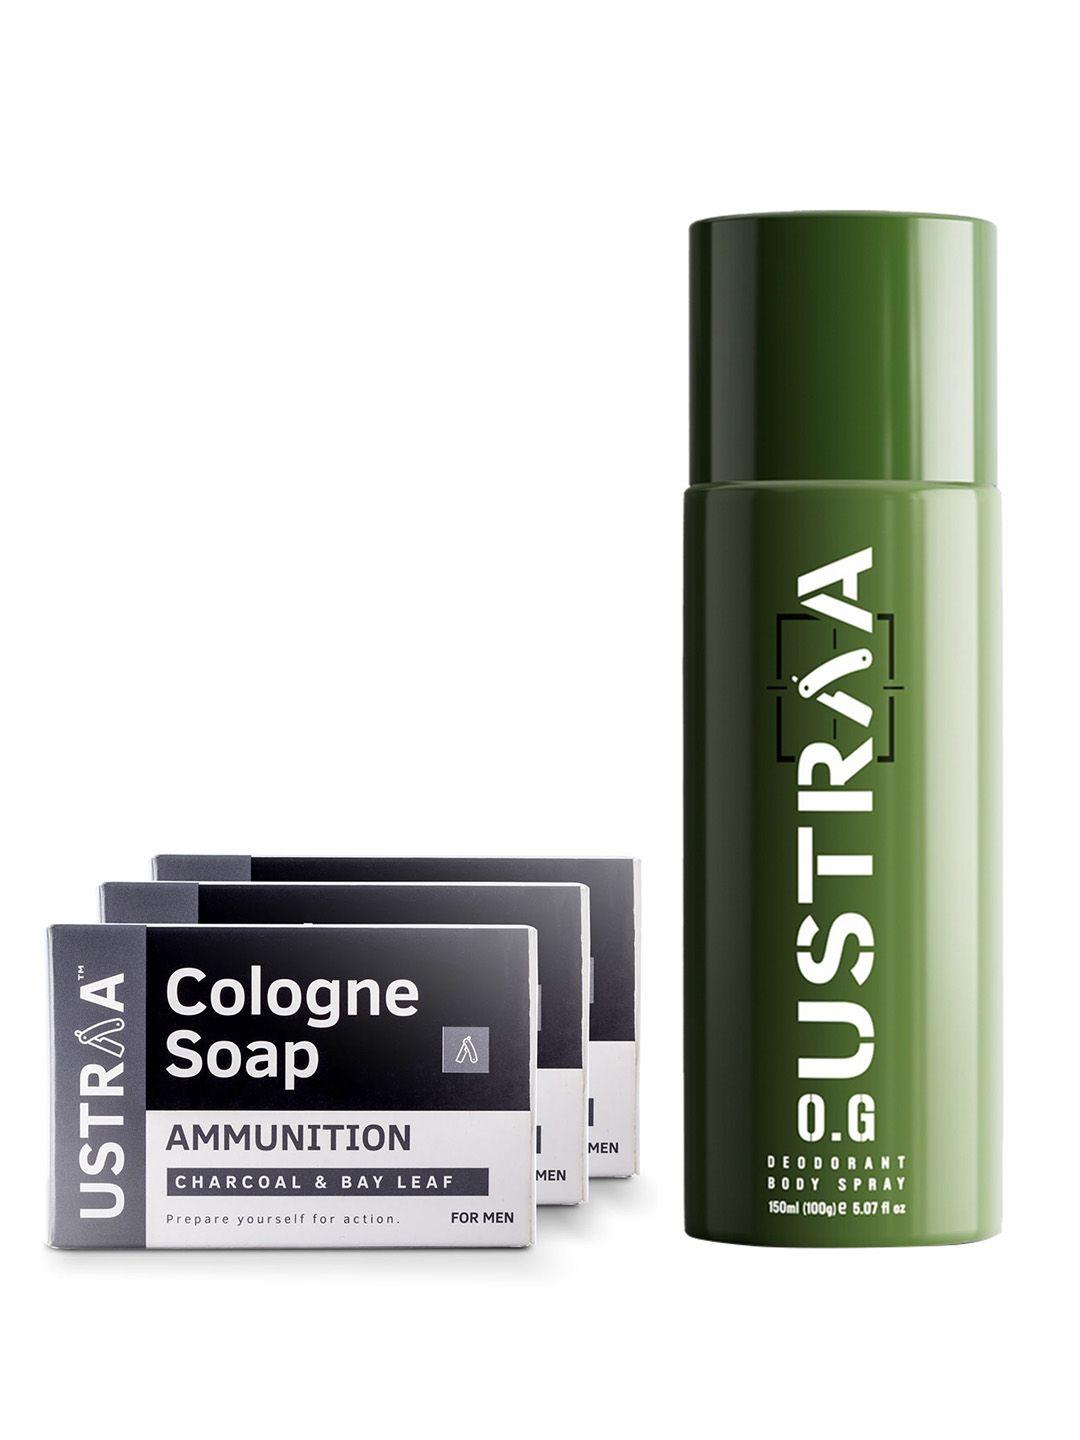 ustraa men set of o.g. deodorant body spray 150 ml + 3 ammunition cologne soaps 125 g each